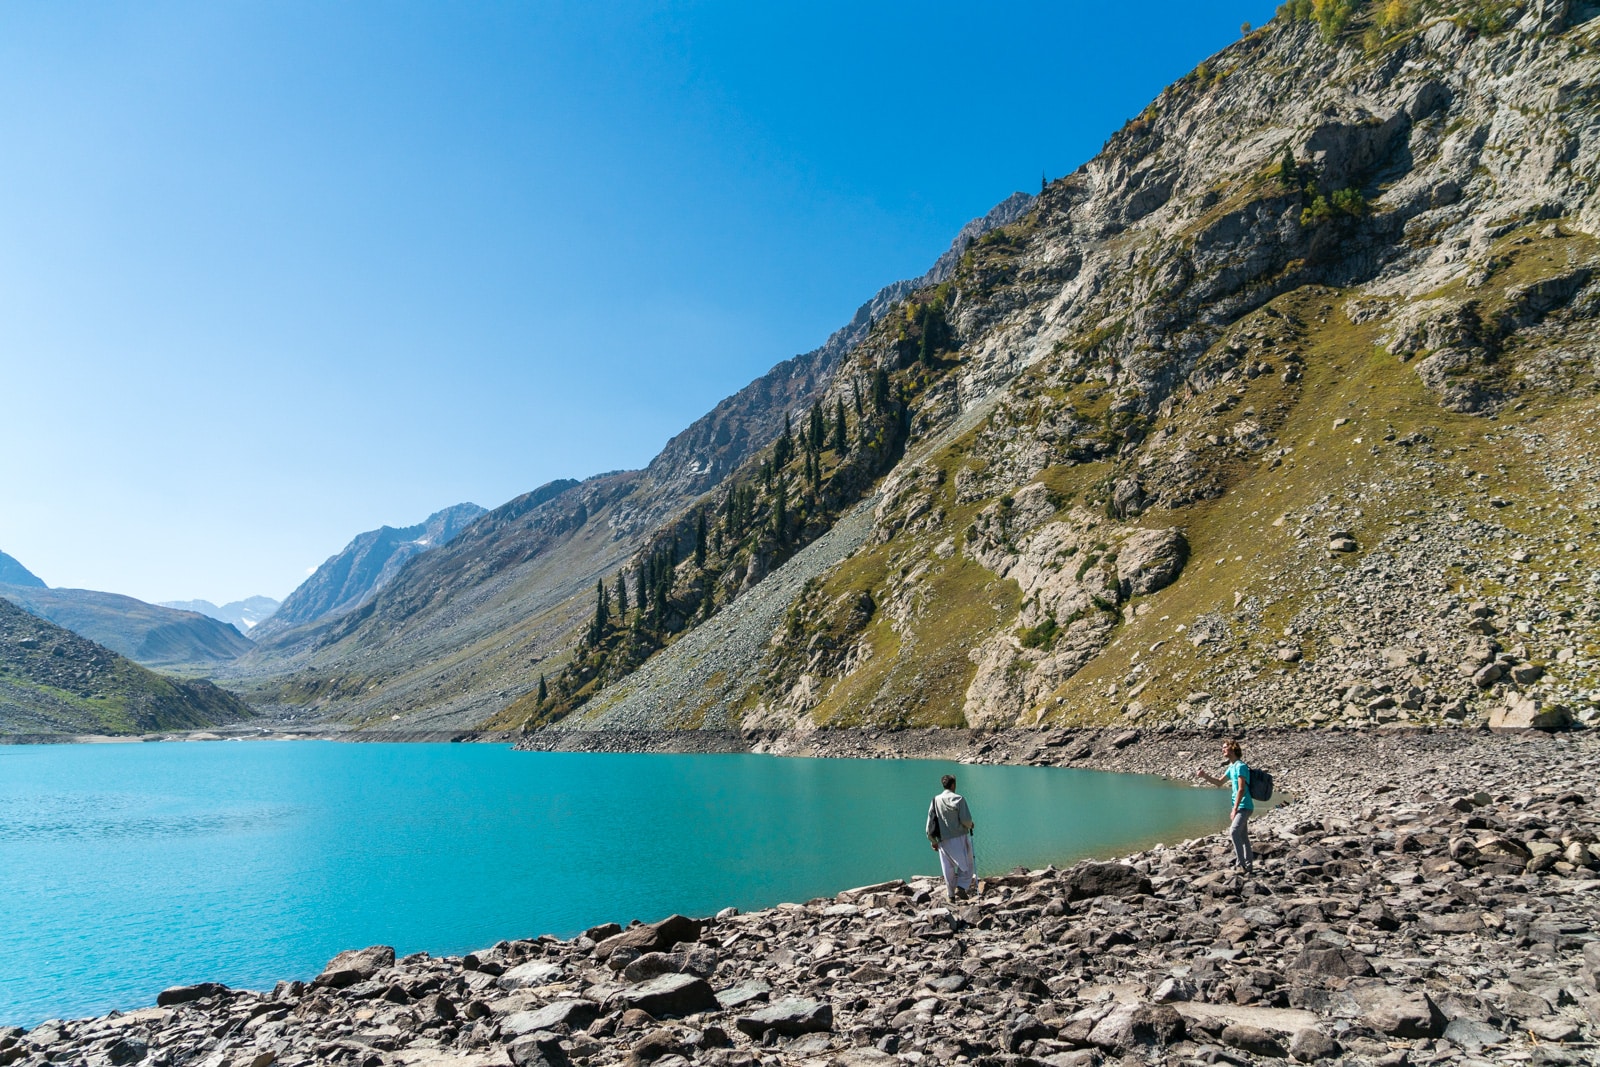 Day trekking in Kalam, Swat Valley, Pakistan - Blue waters at Kandol alpine lake - Lost With Purpose travel blog